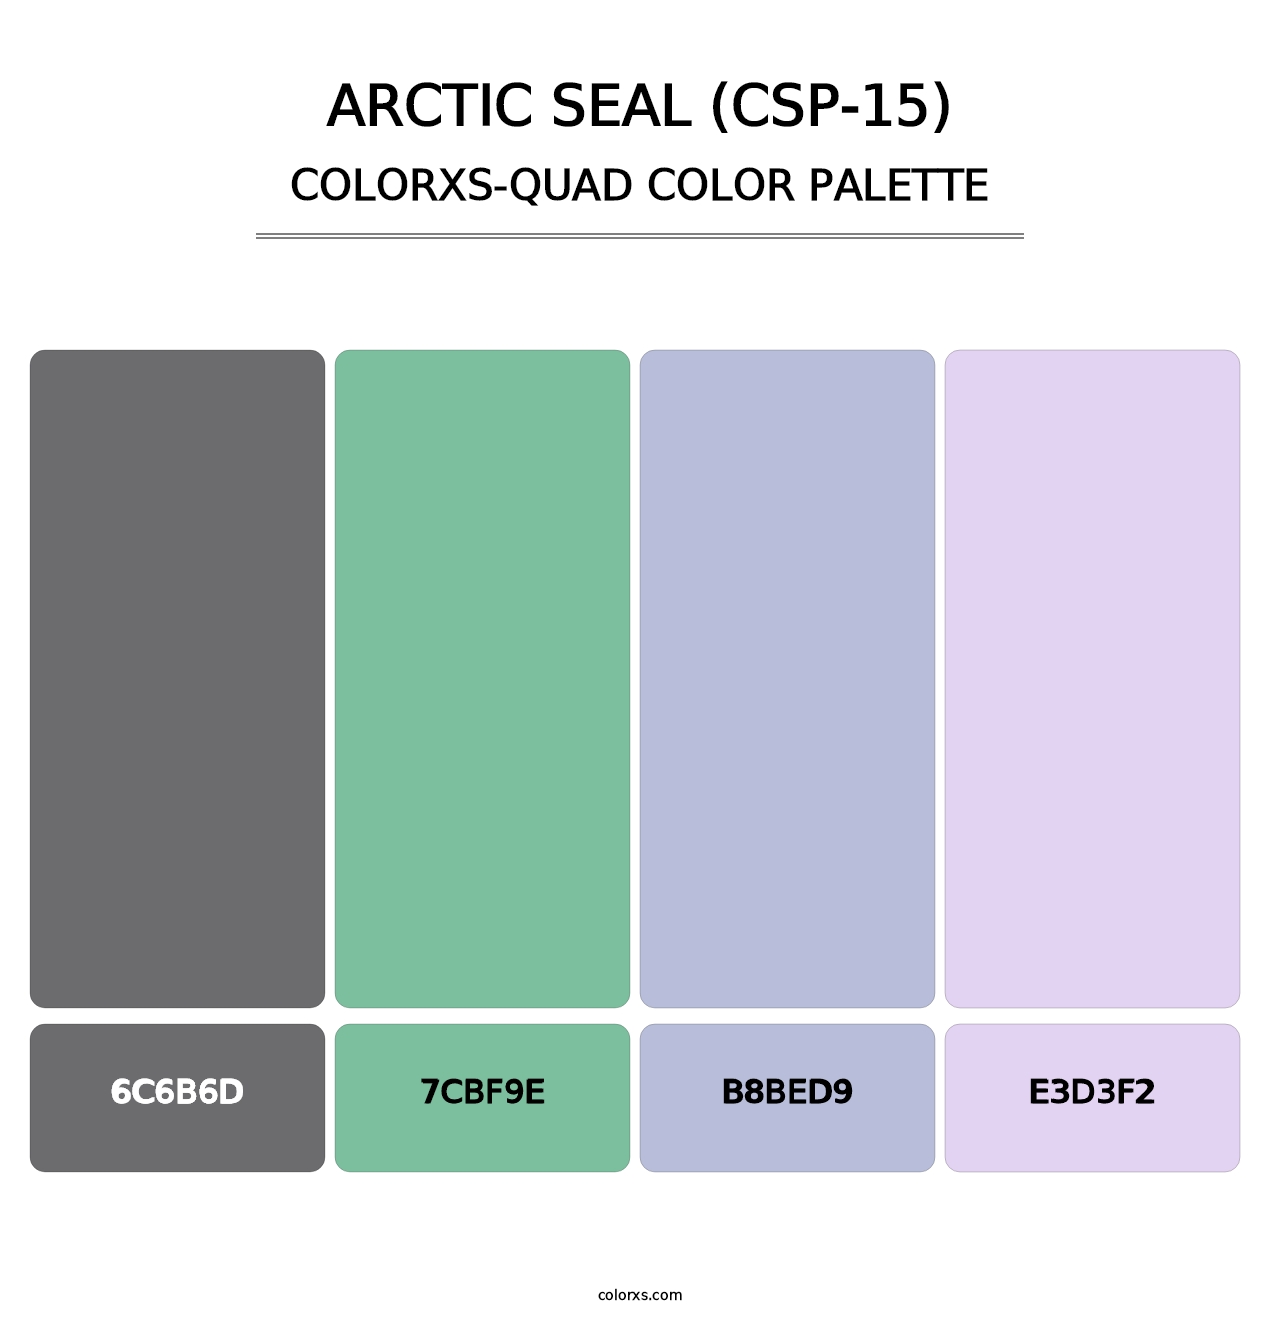 Arctic Seal (CSP-15) - Colorxs Quad Palette